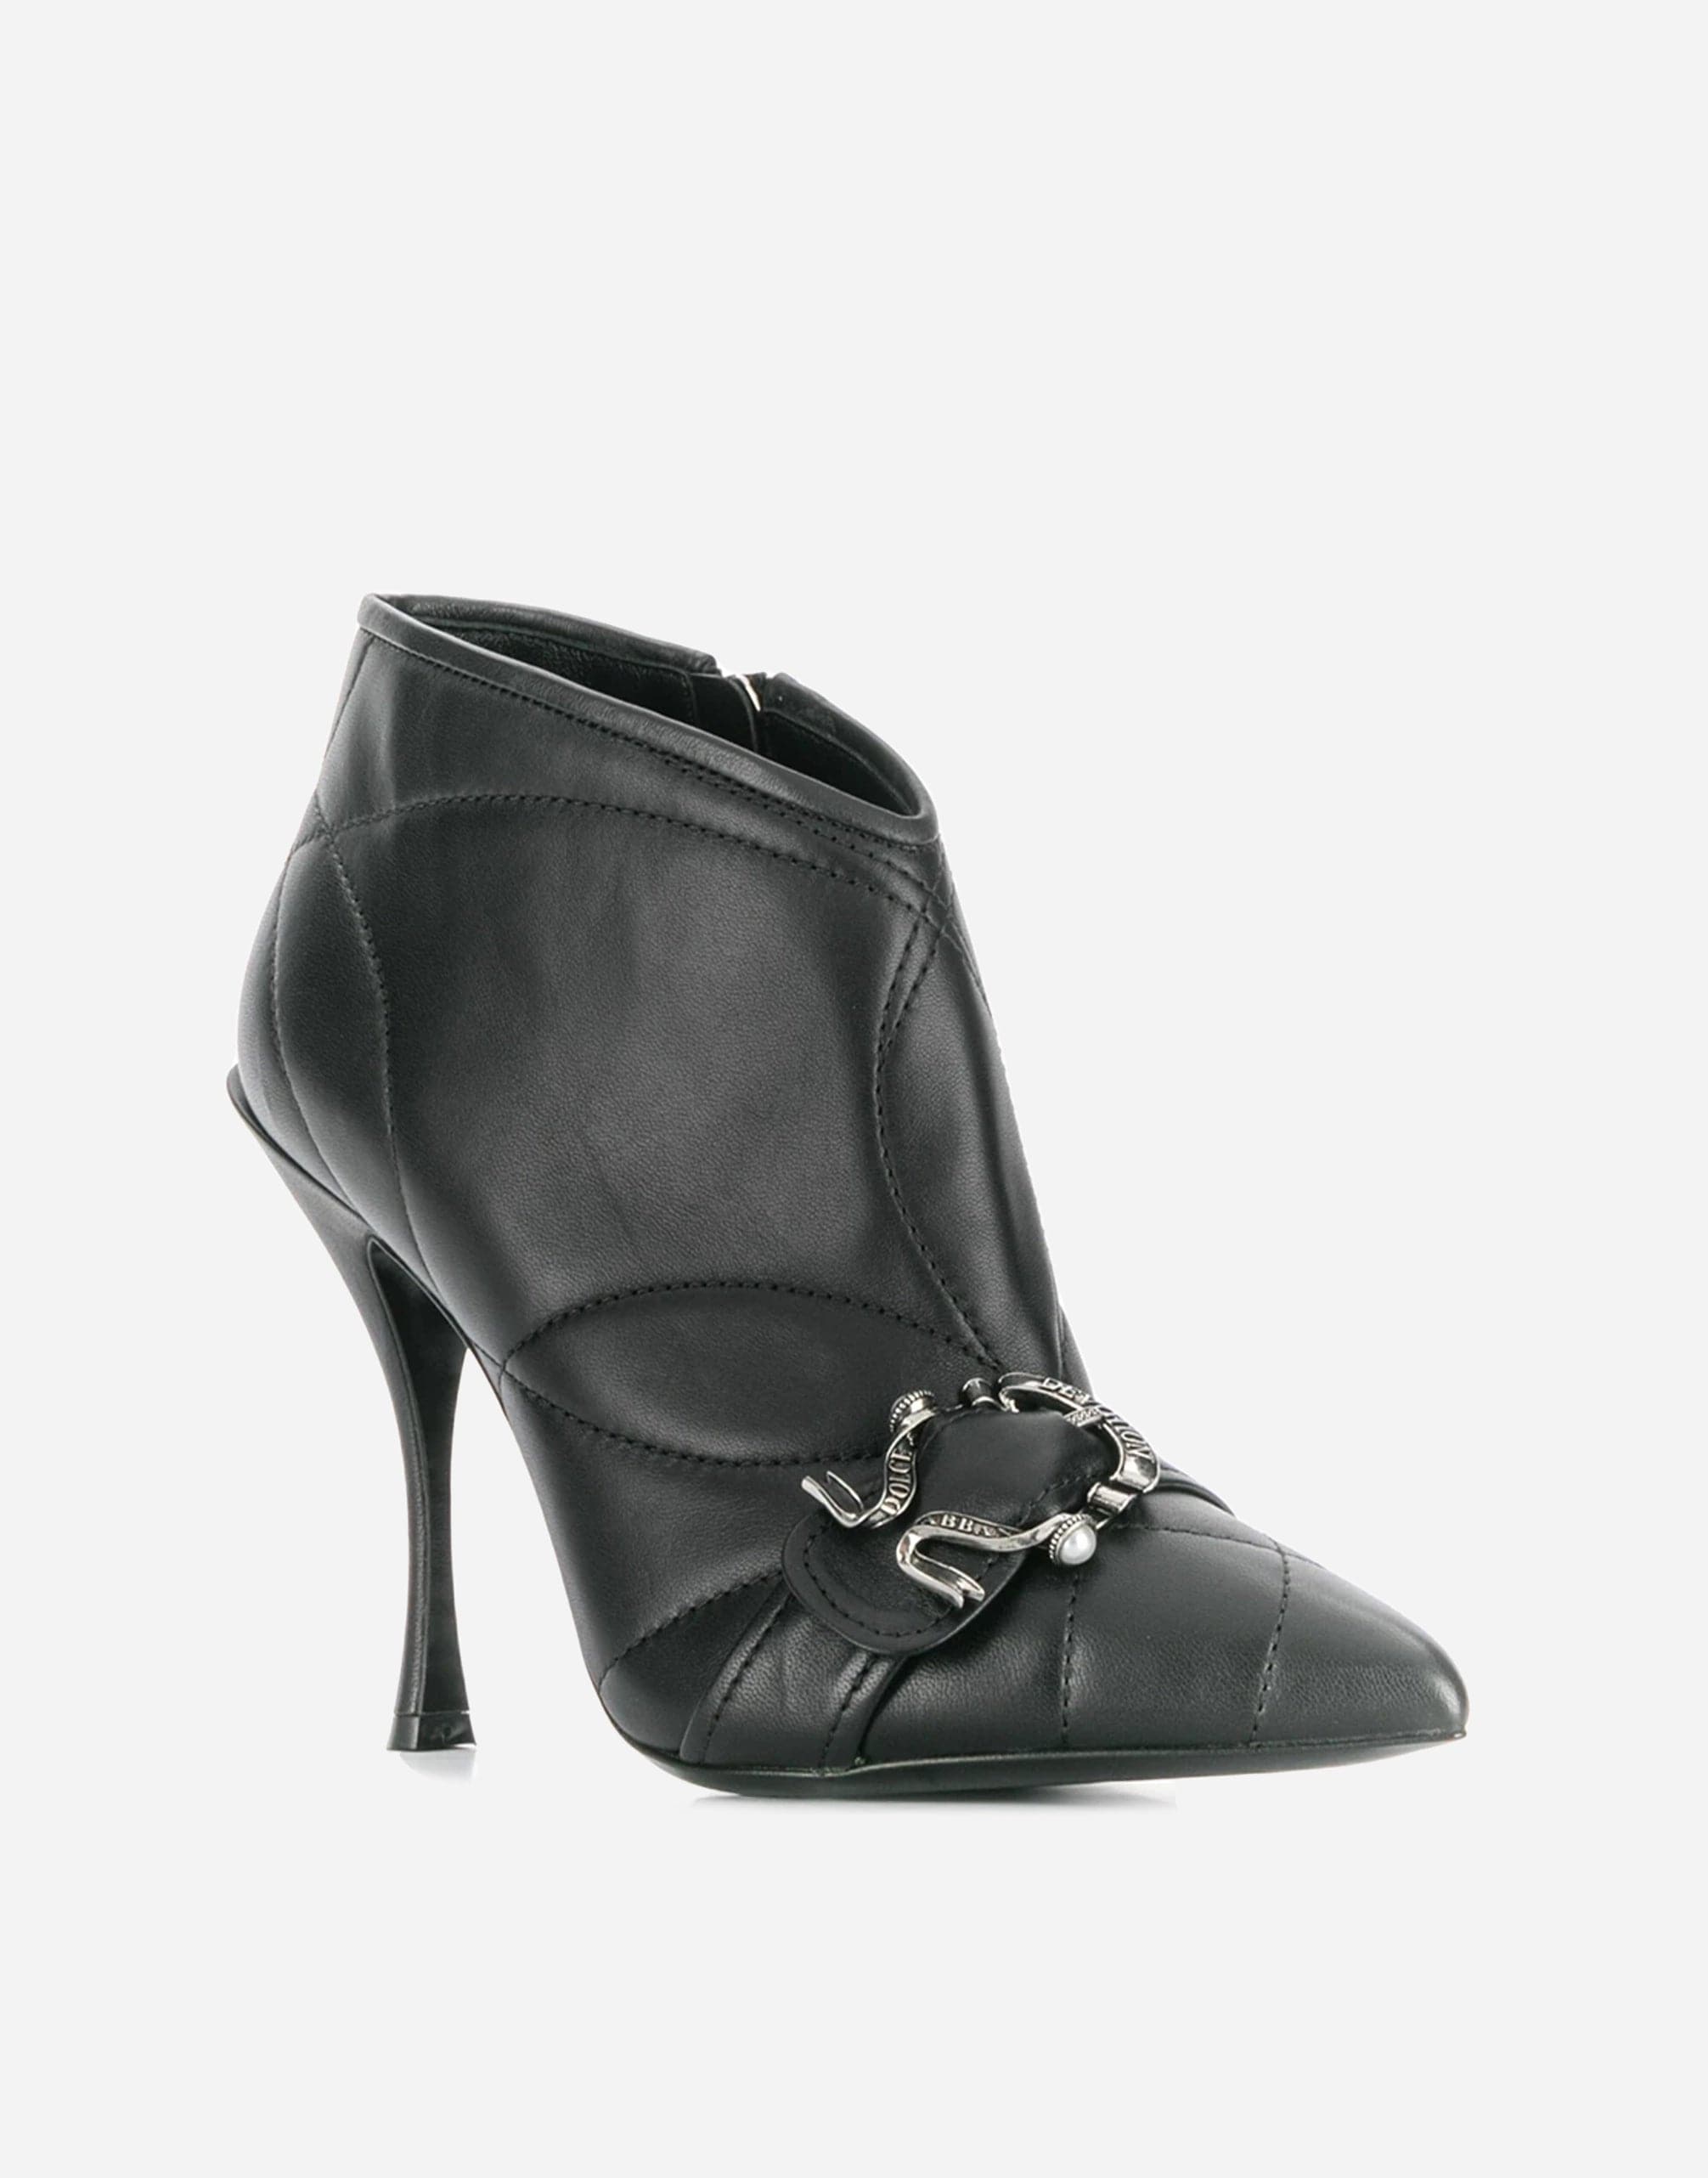 Dolce & Gabbana Boots for Women Sale | Sendegaro